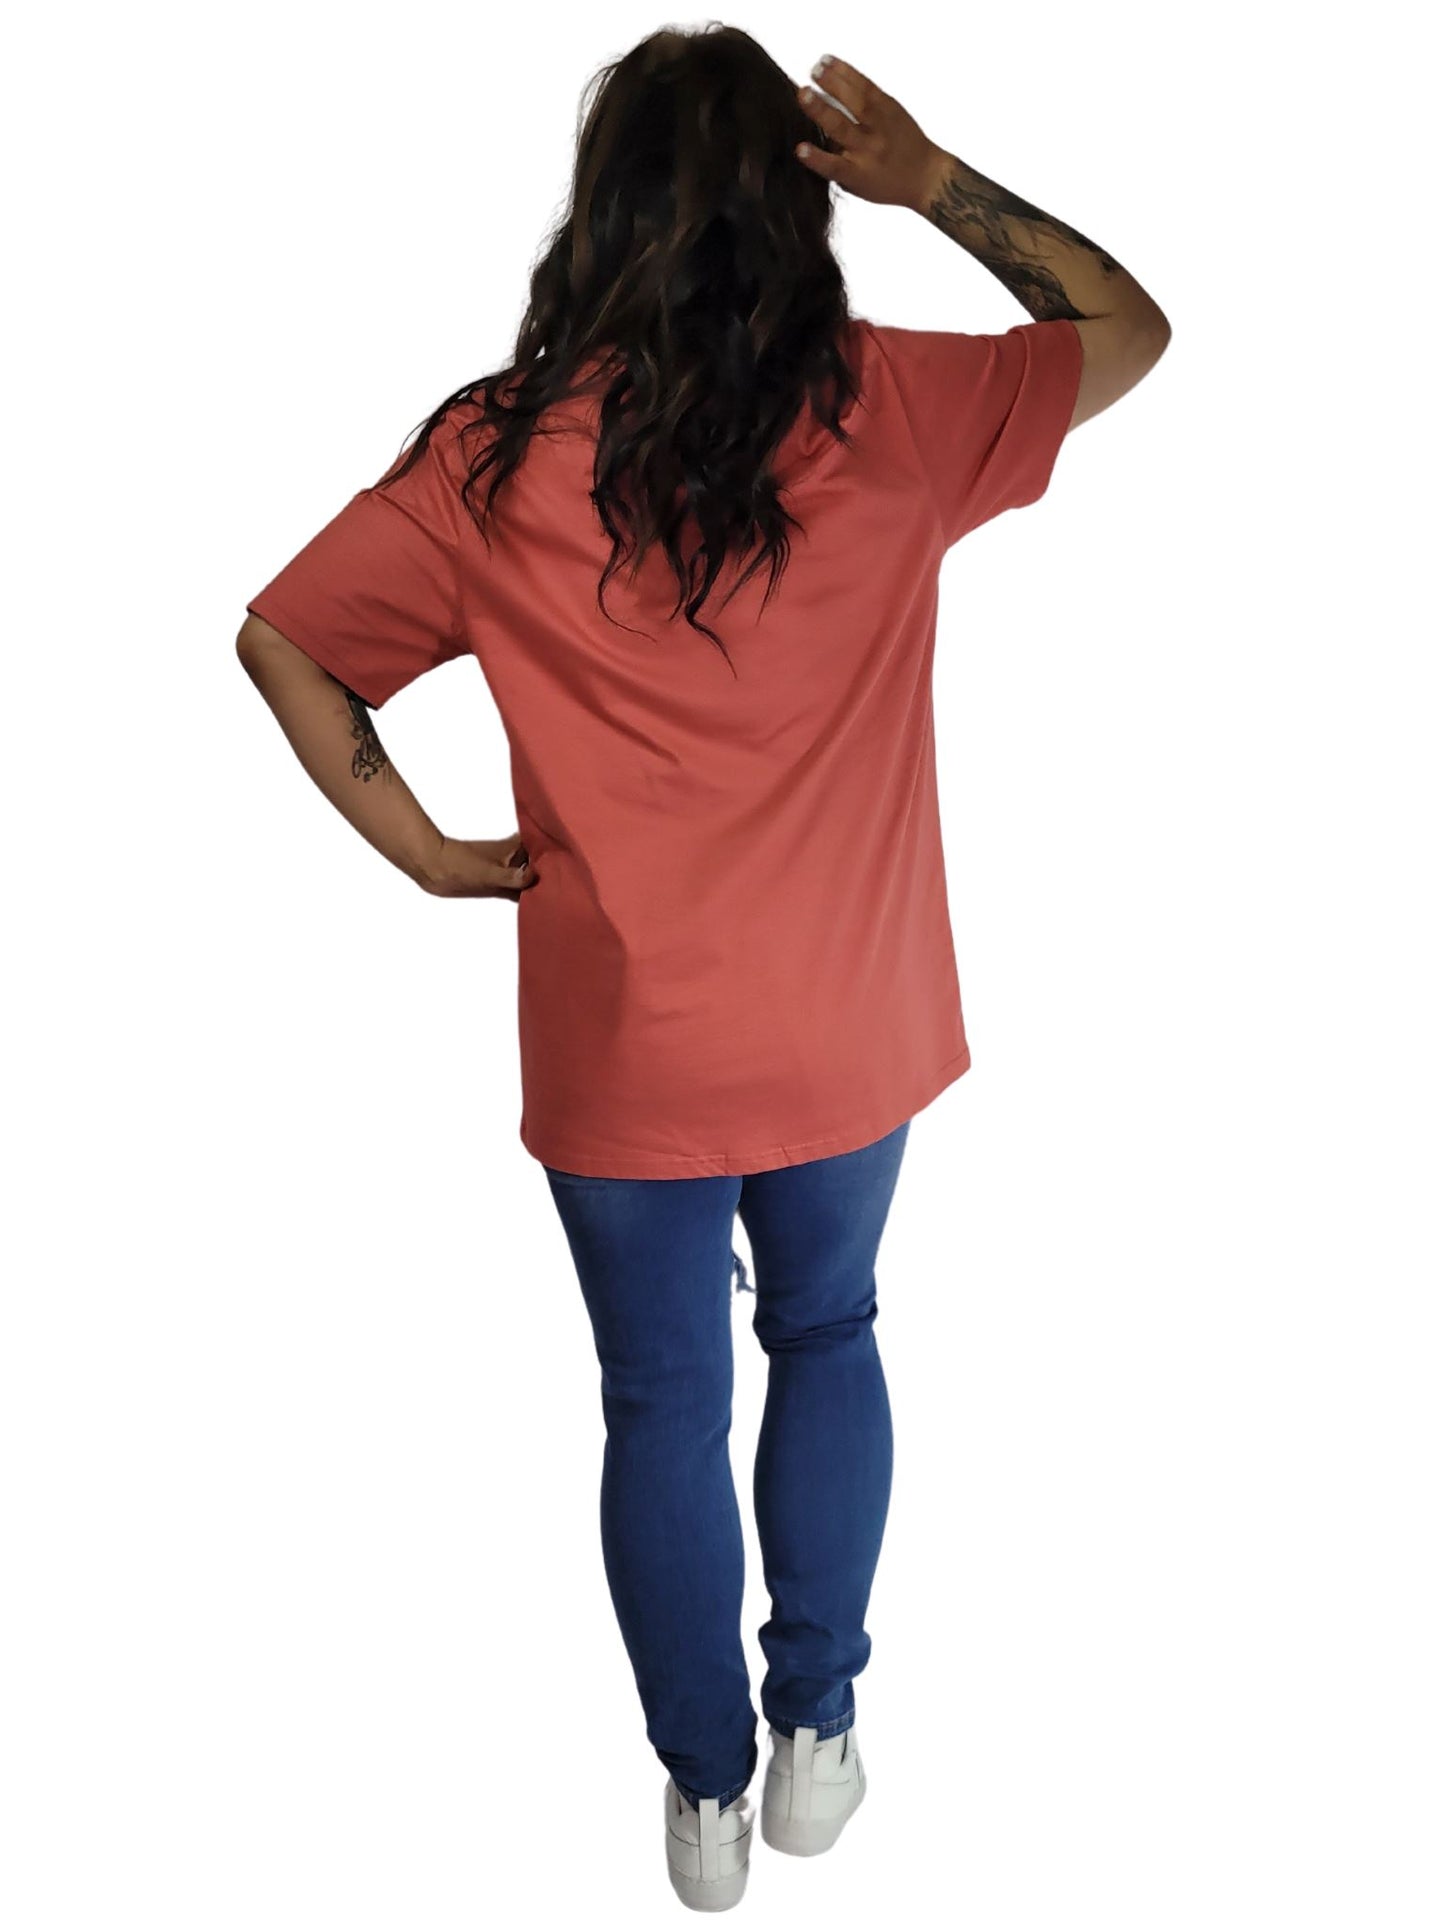 HUNGRY Graphic Red Design T-Shirt - Handmade Tshirt Aambers Goodies xx 